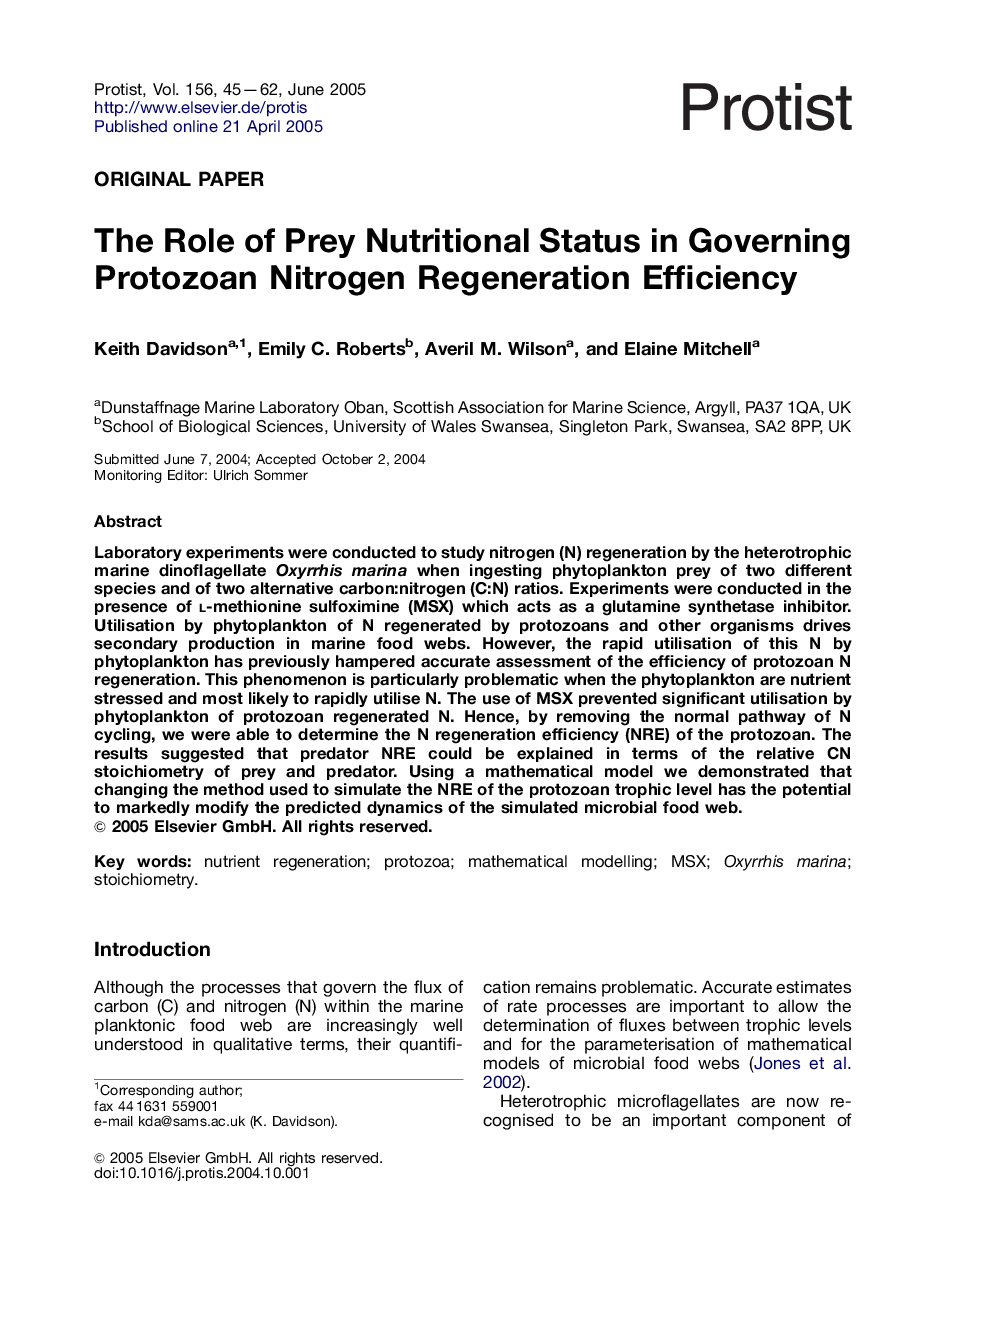 The Role of Prey Nutritional Status in Governing Protozoan Nitrogen Regeneration Efficiency